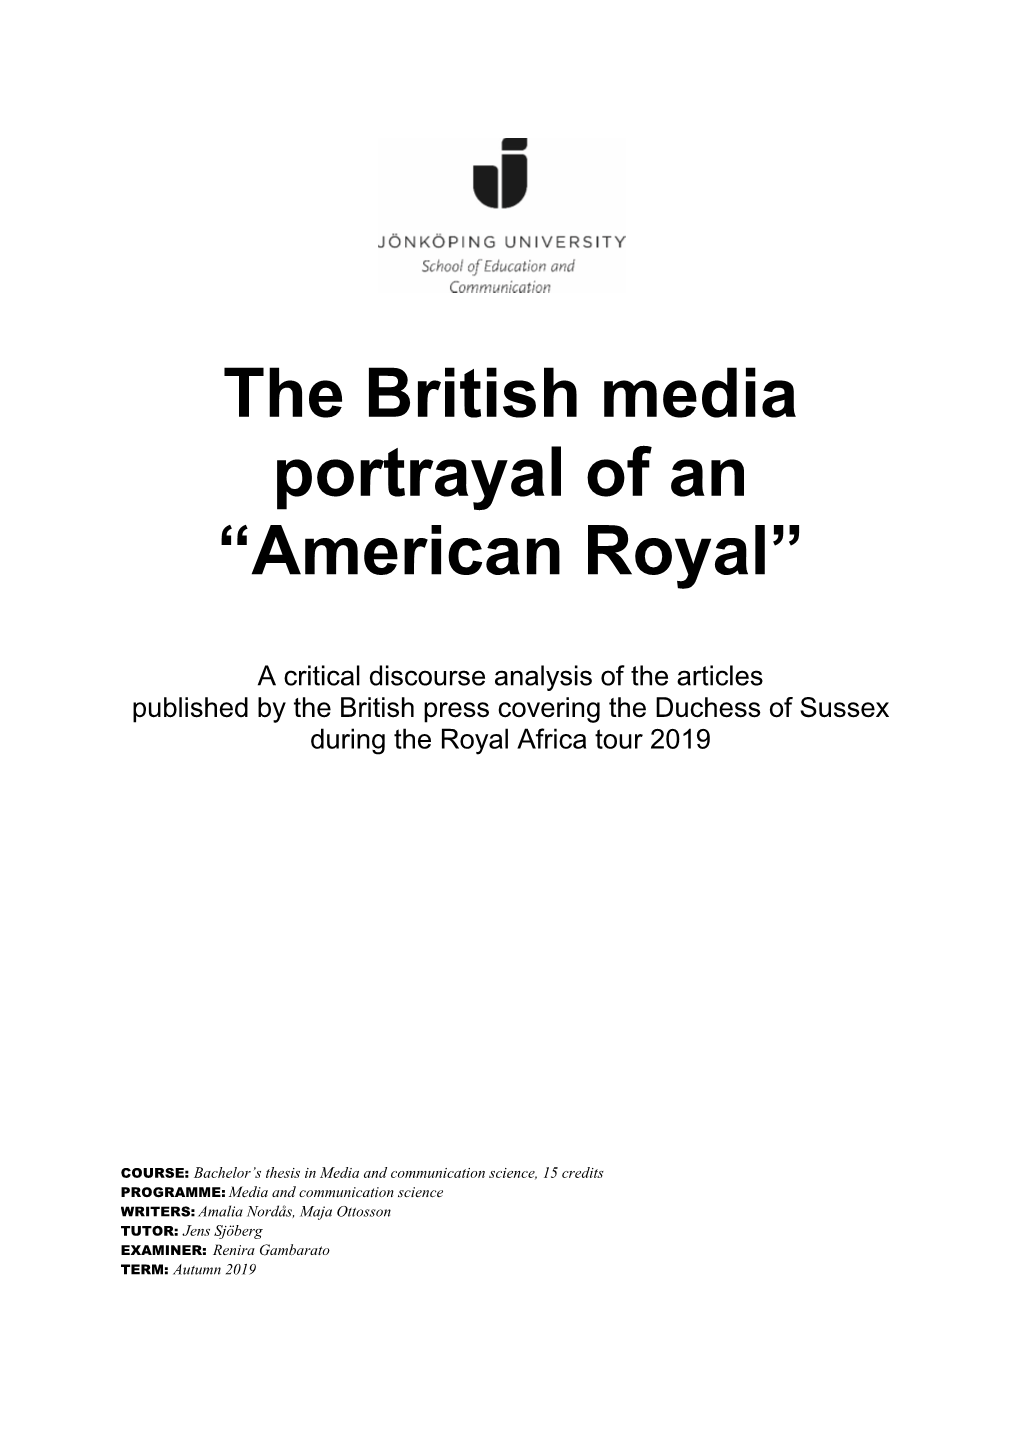 The British Media Portrayal of an “American Royal”